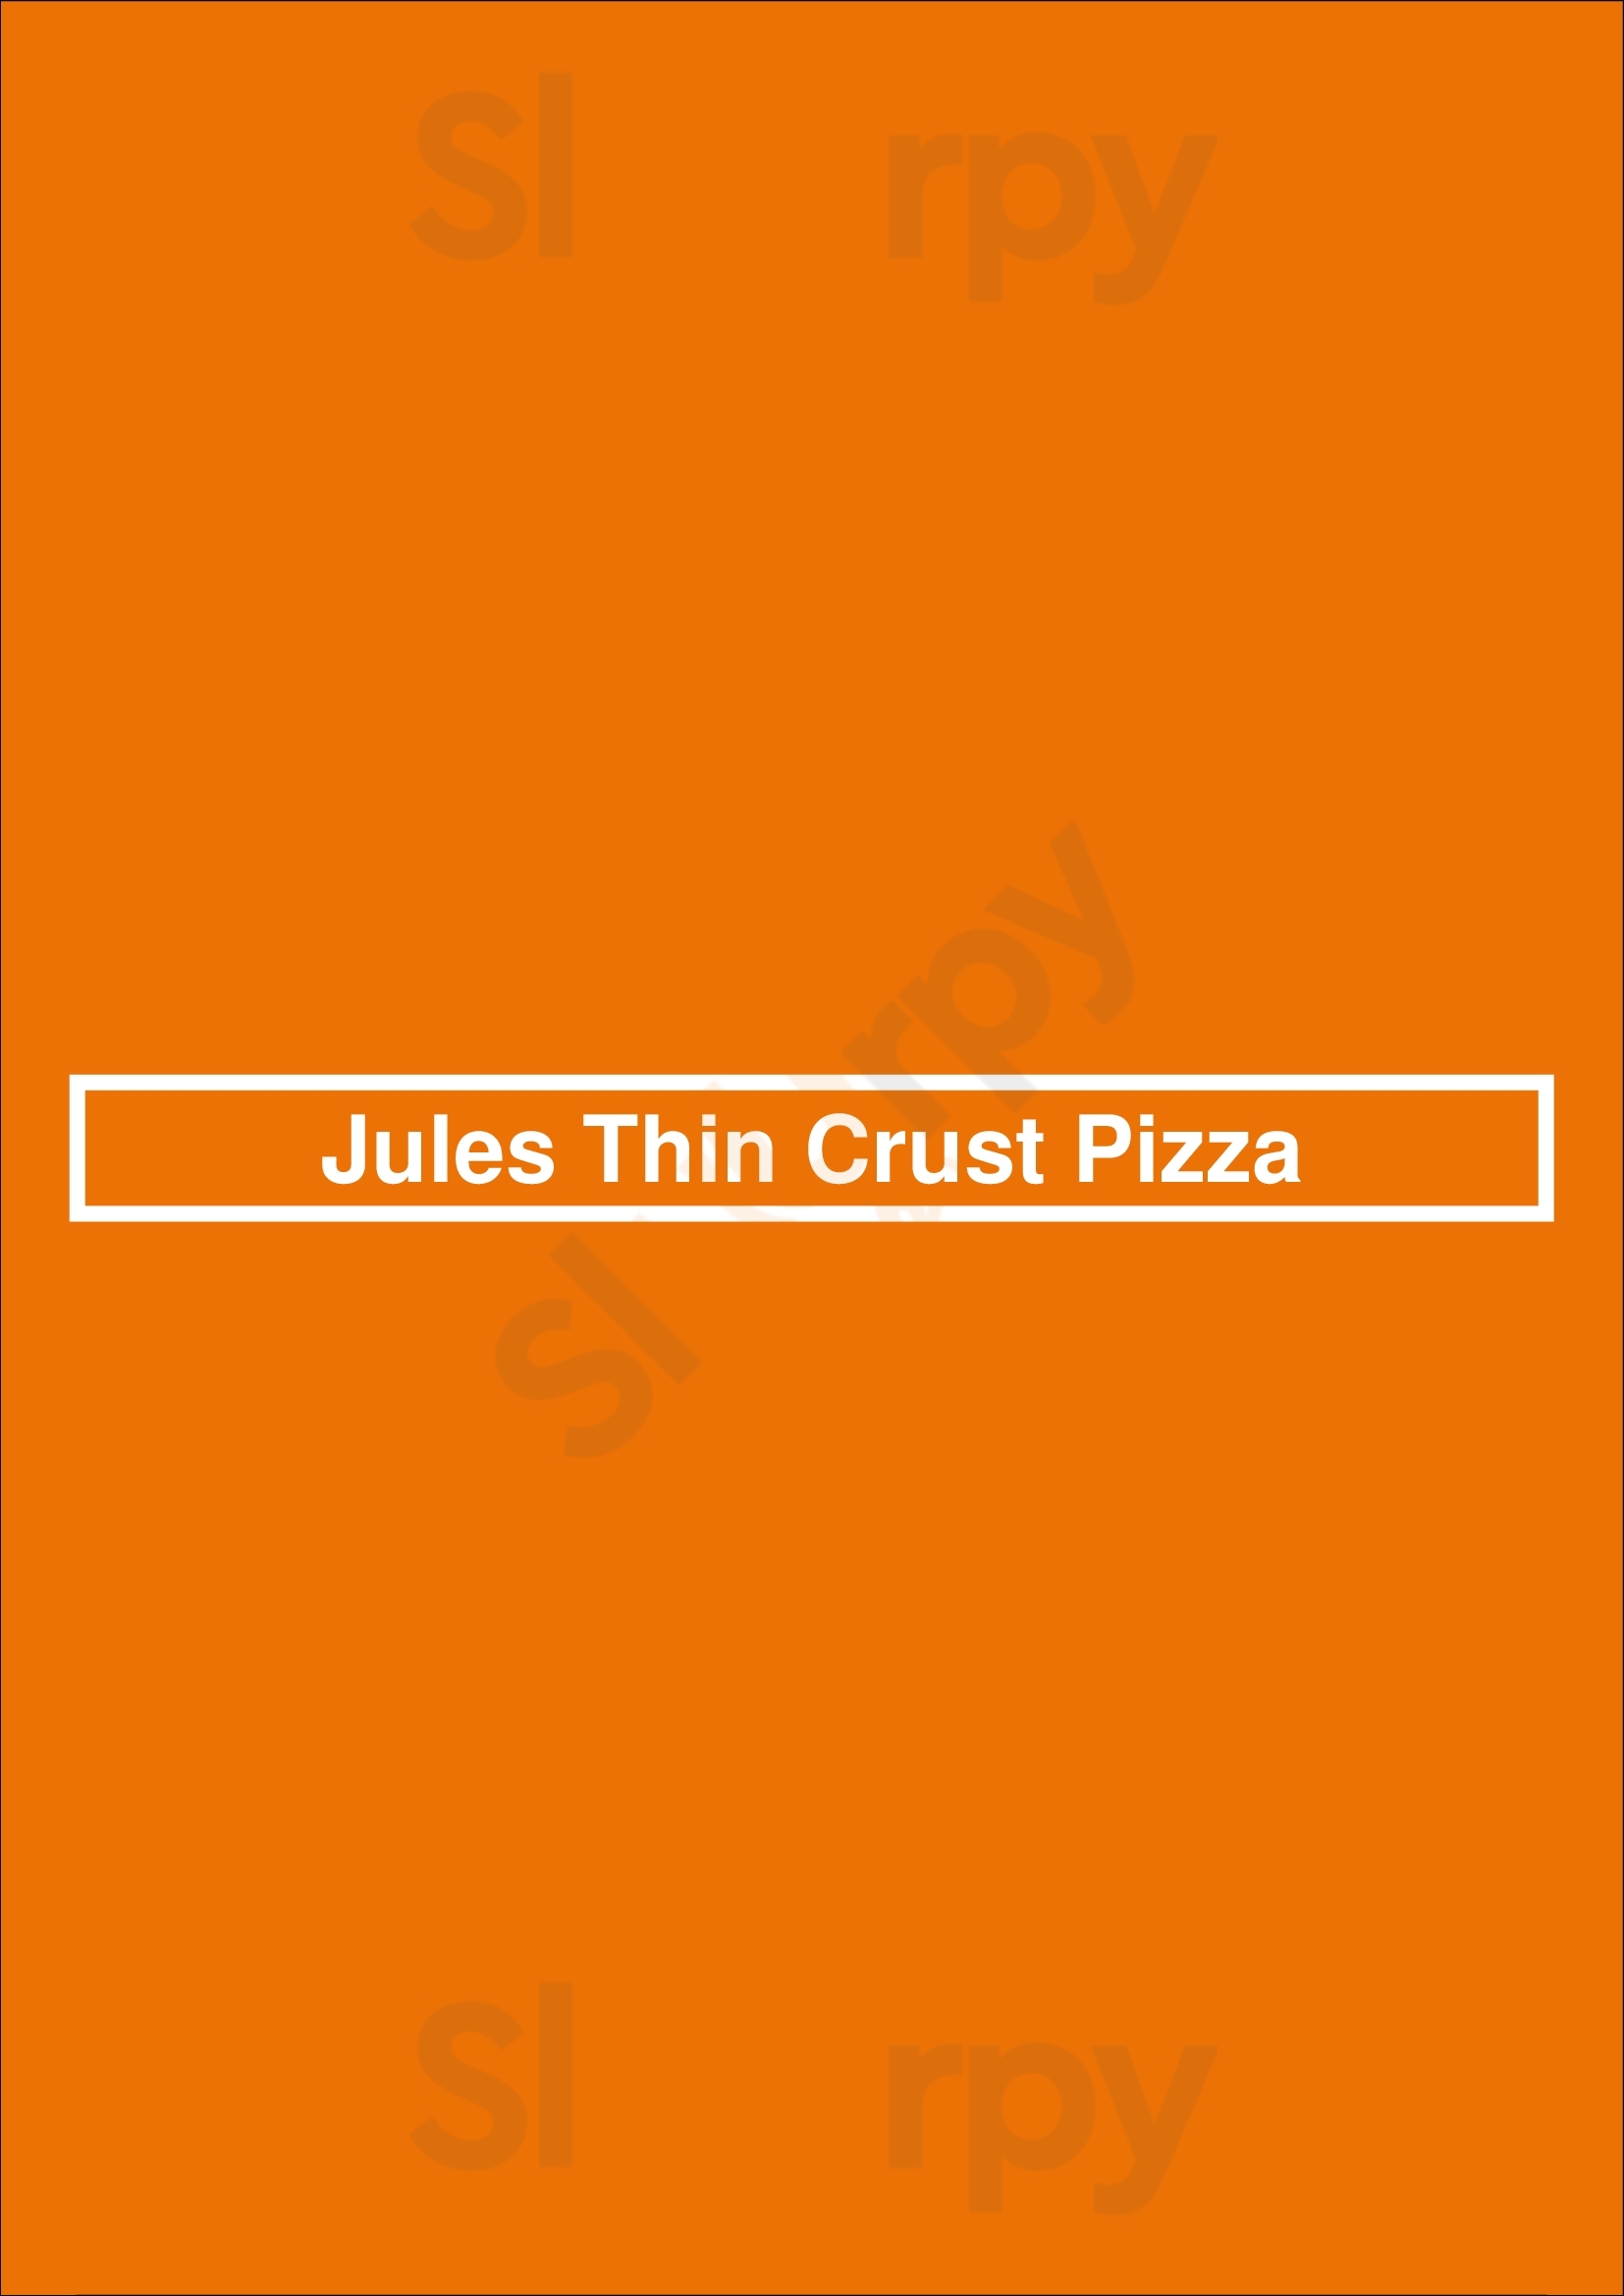 Jules Thin Crust Pizza Oakland Menu - 1